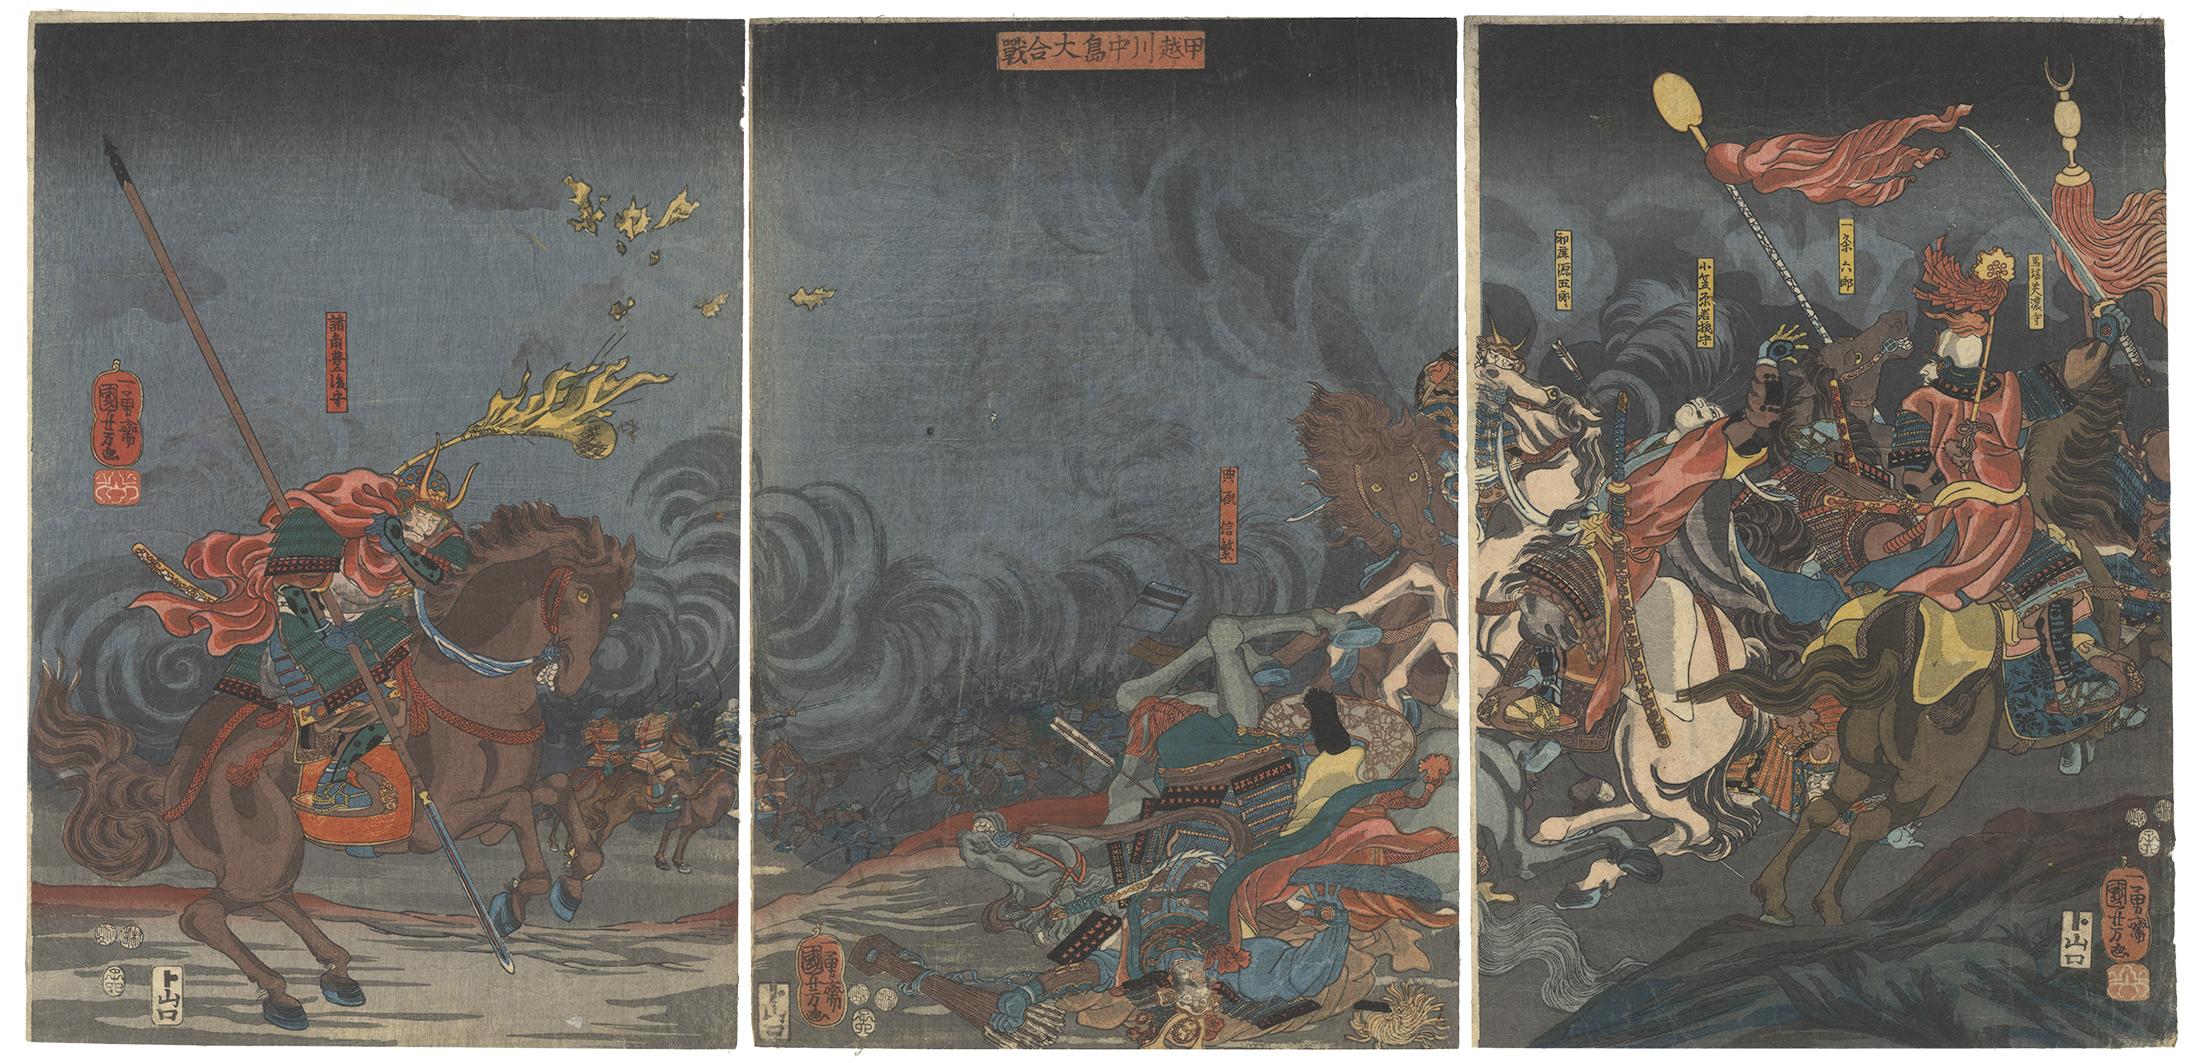 Utagawa Kuniyoshi Figurative Print - Kuniyoshi, Original Japanese Woodblock Print, Great Battle, Samurai, Warrior Art